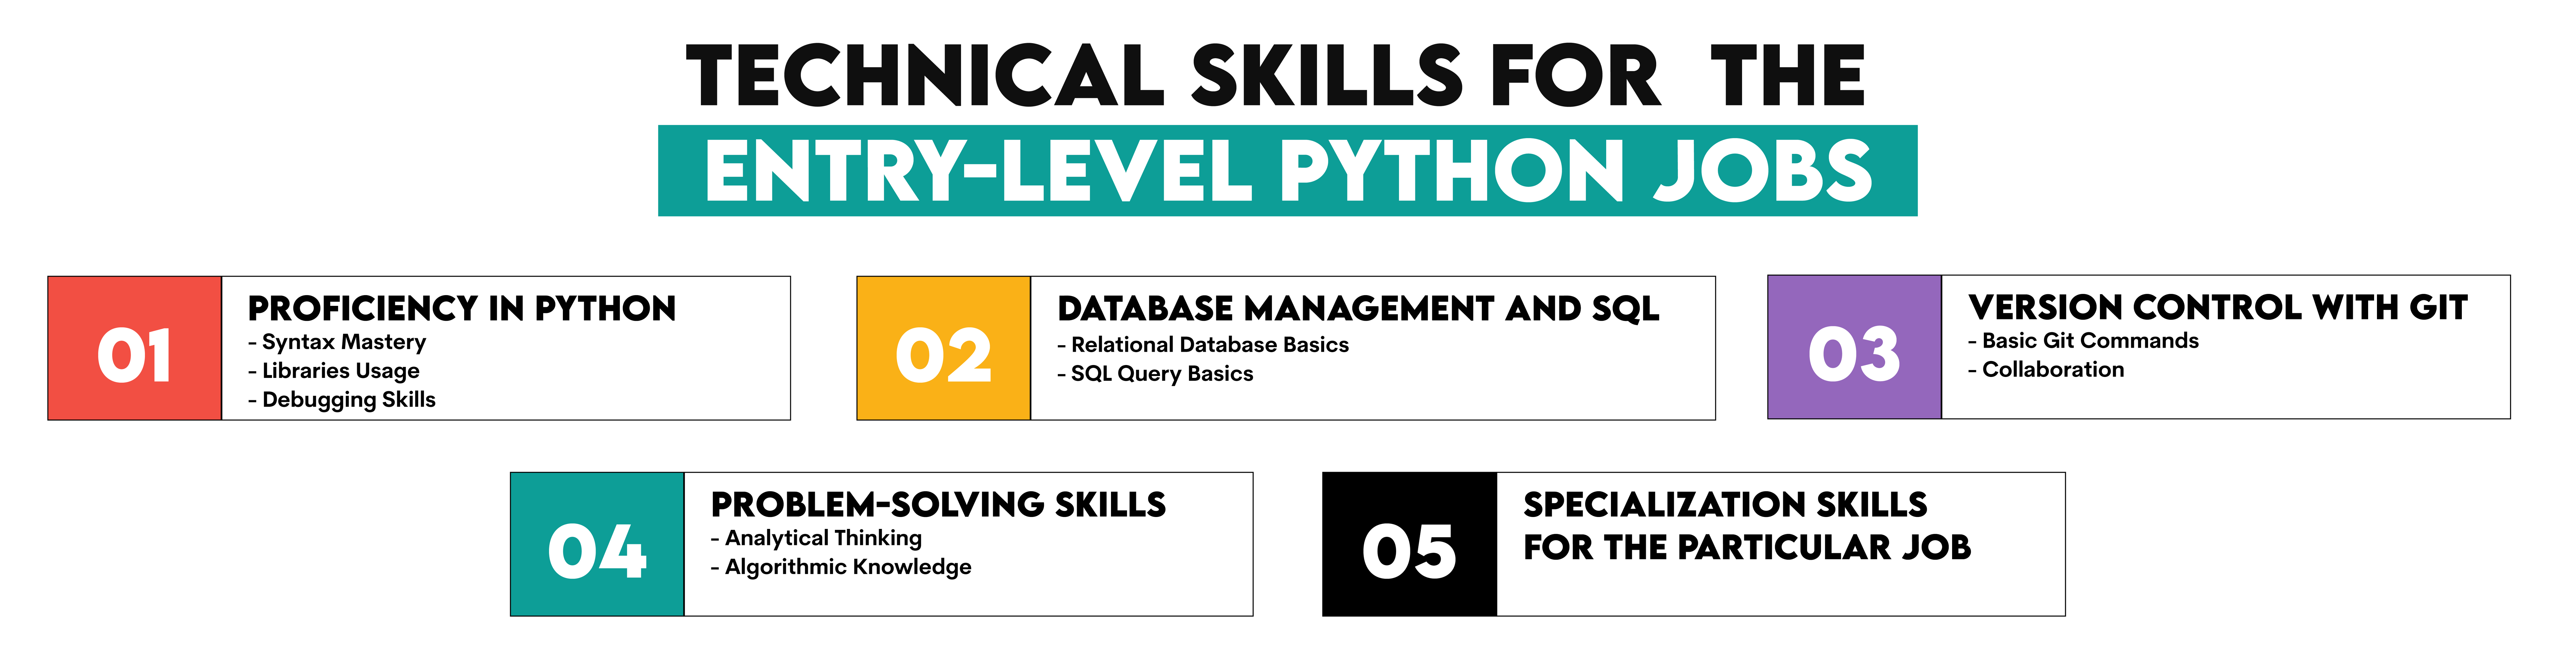 Technical skills for Entry Level Python Jobs